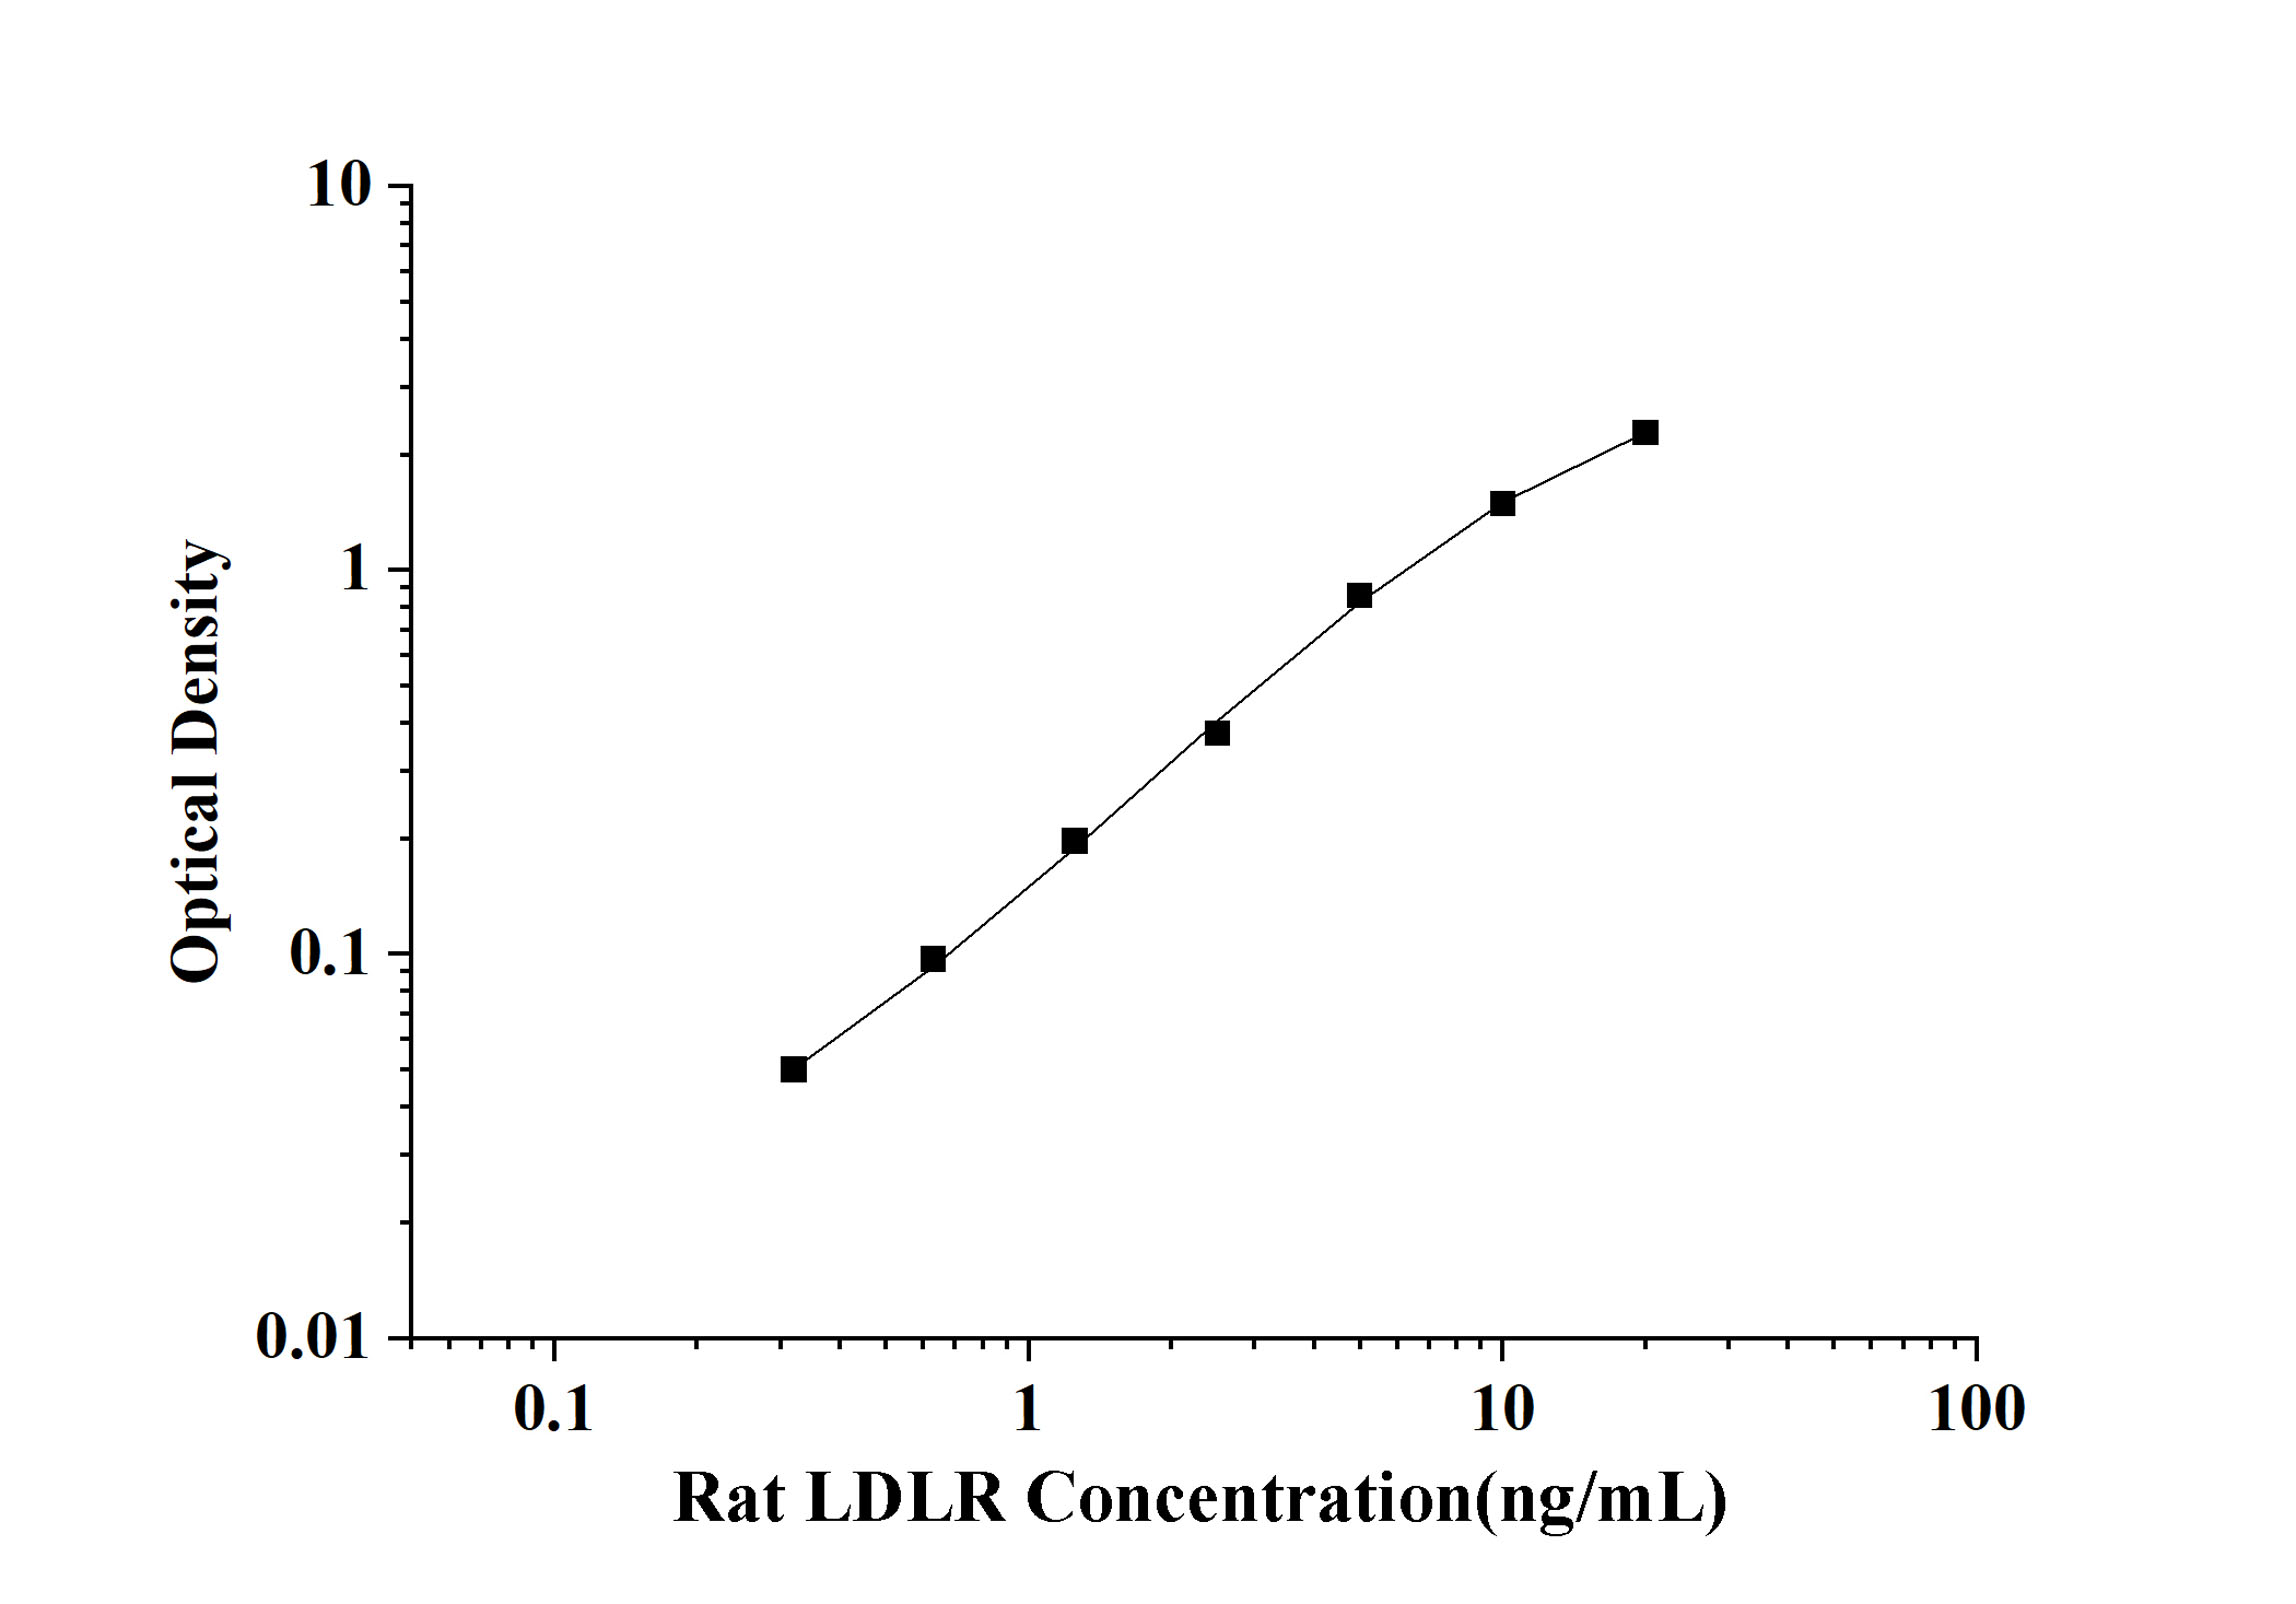 Rat LDLR(Low Density Lipoprotein Receptor) ELISA Kit